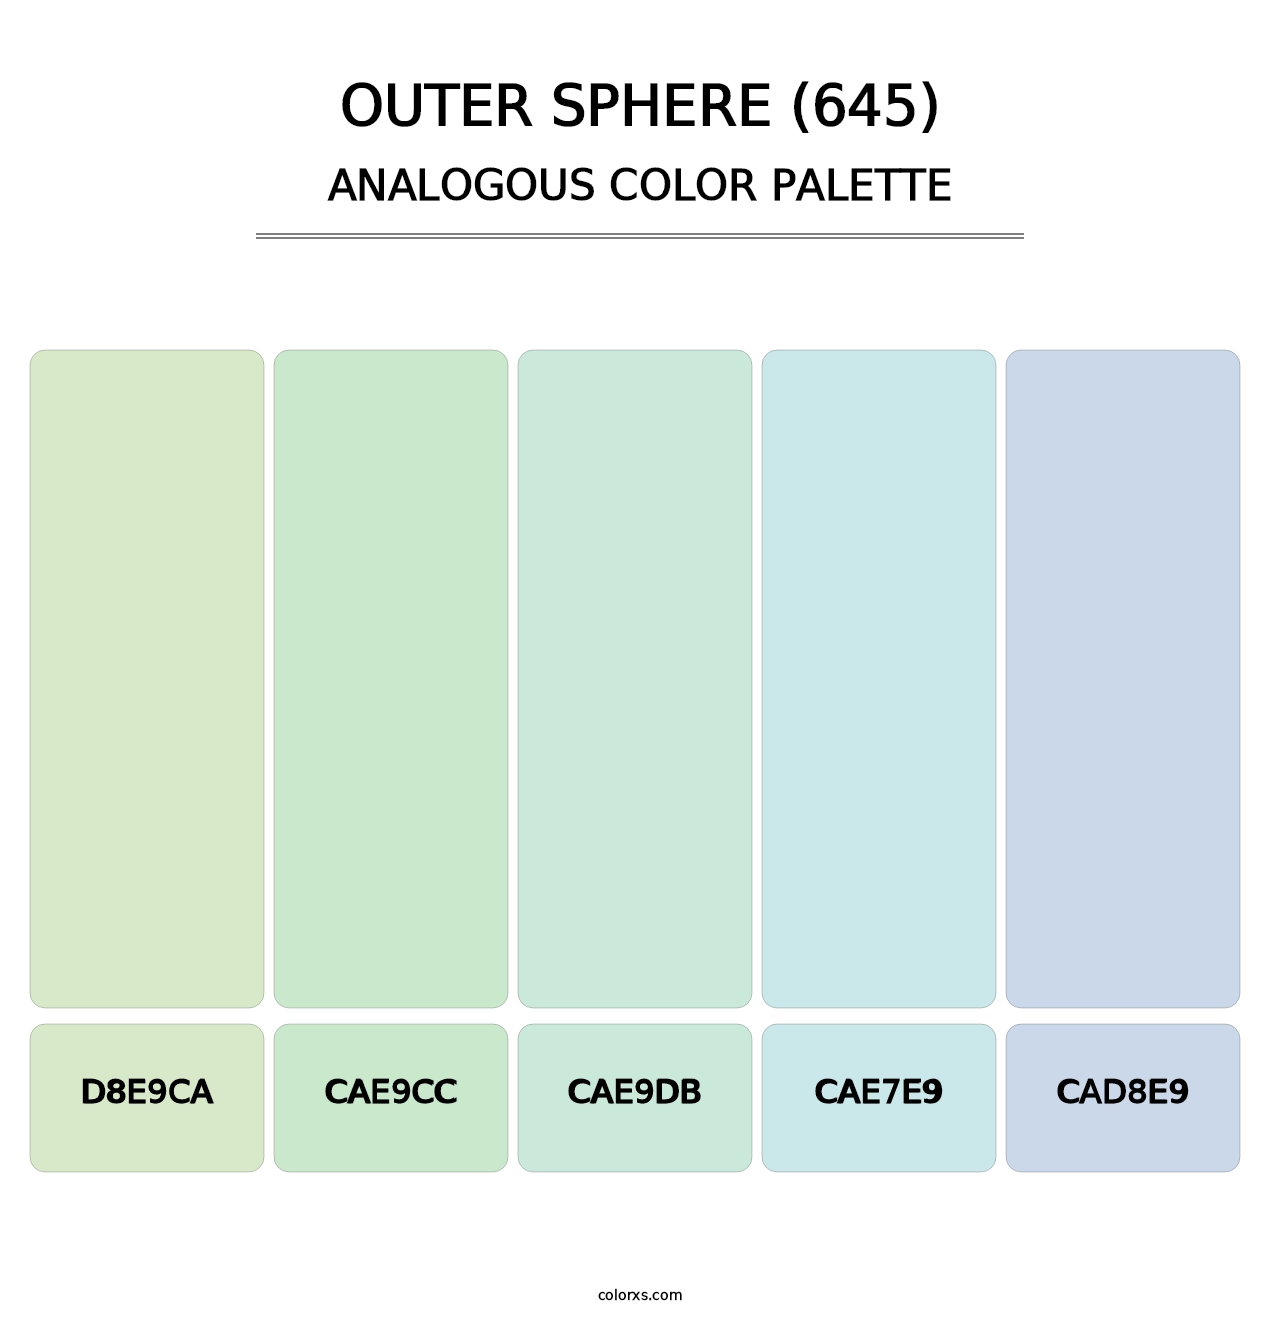 Outer Sphere (645) - Analogous Color Palette